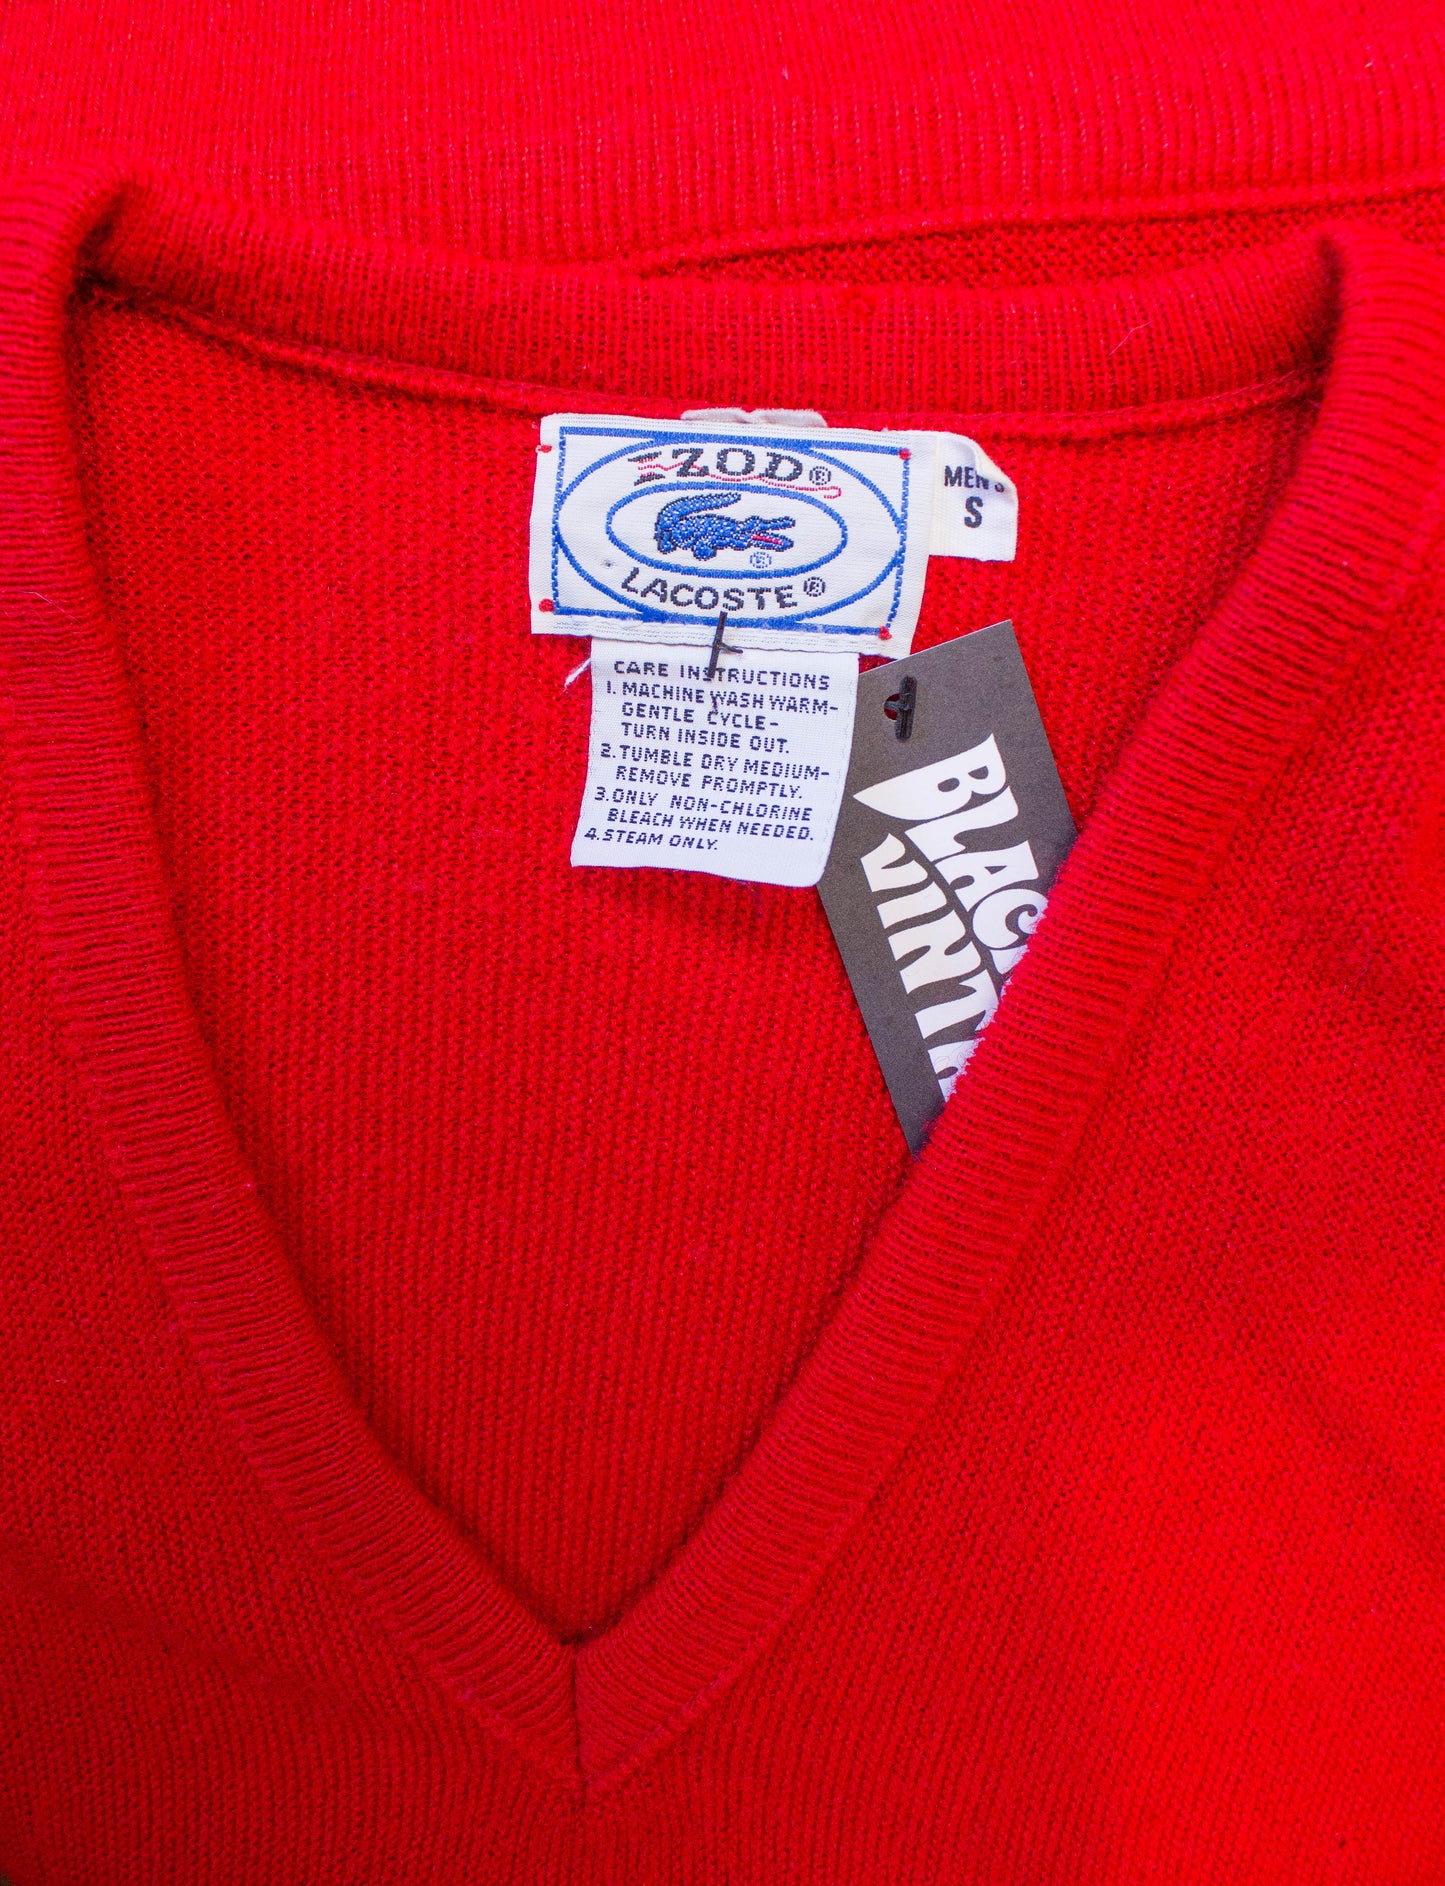 Vintage 70s Izod Lacoste Acrylic V-Neck Red Sweater Unisex Small-Medium